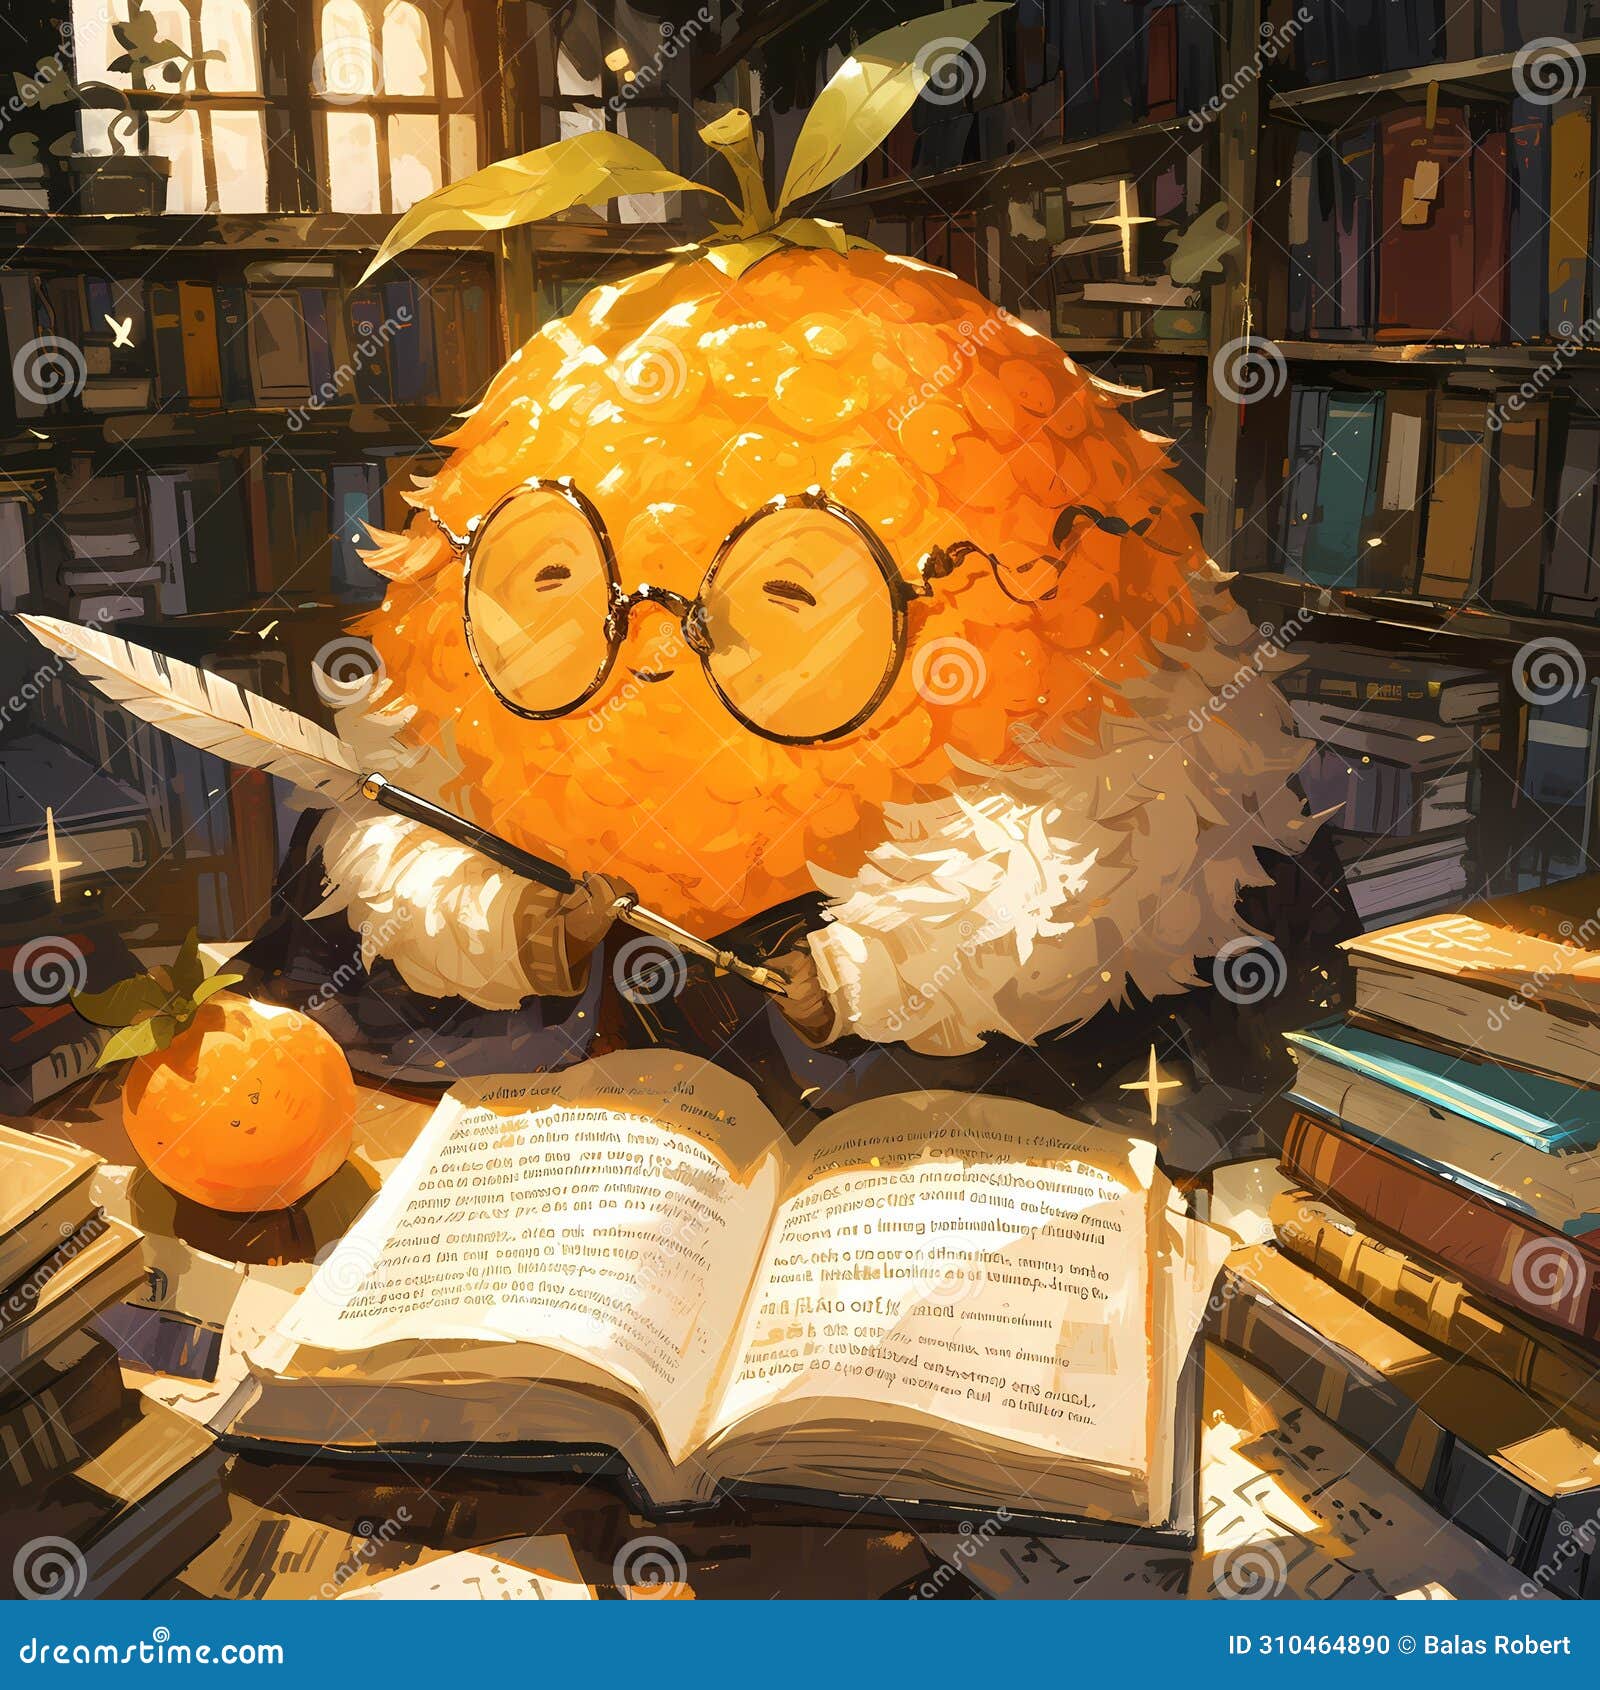 bibliophile orange: a joyful reader's journey